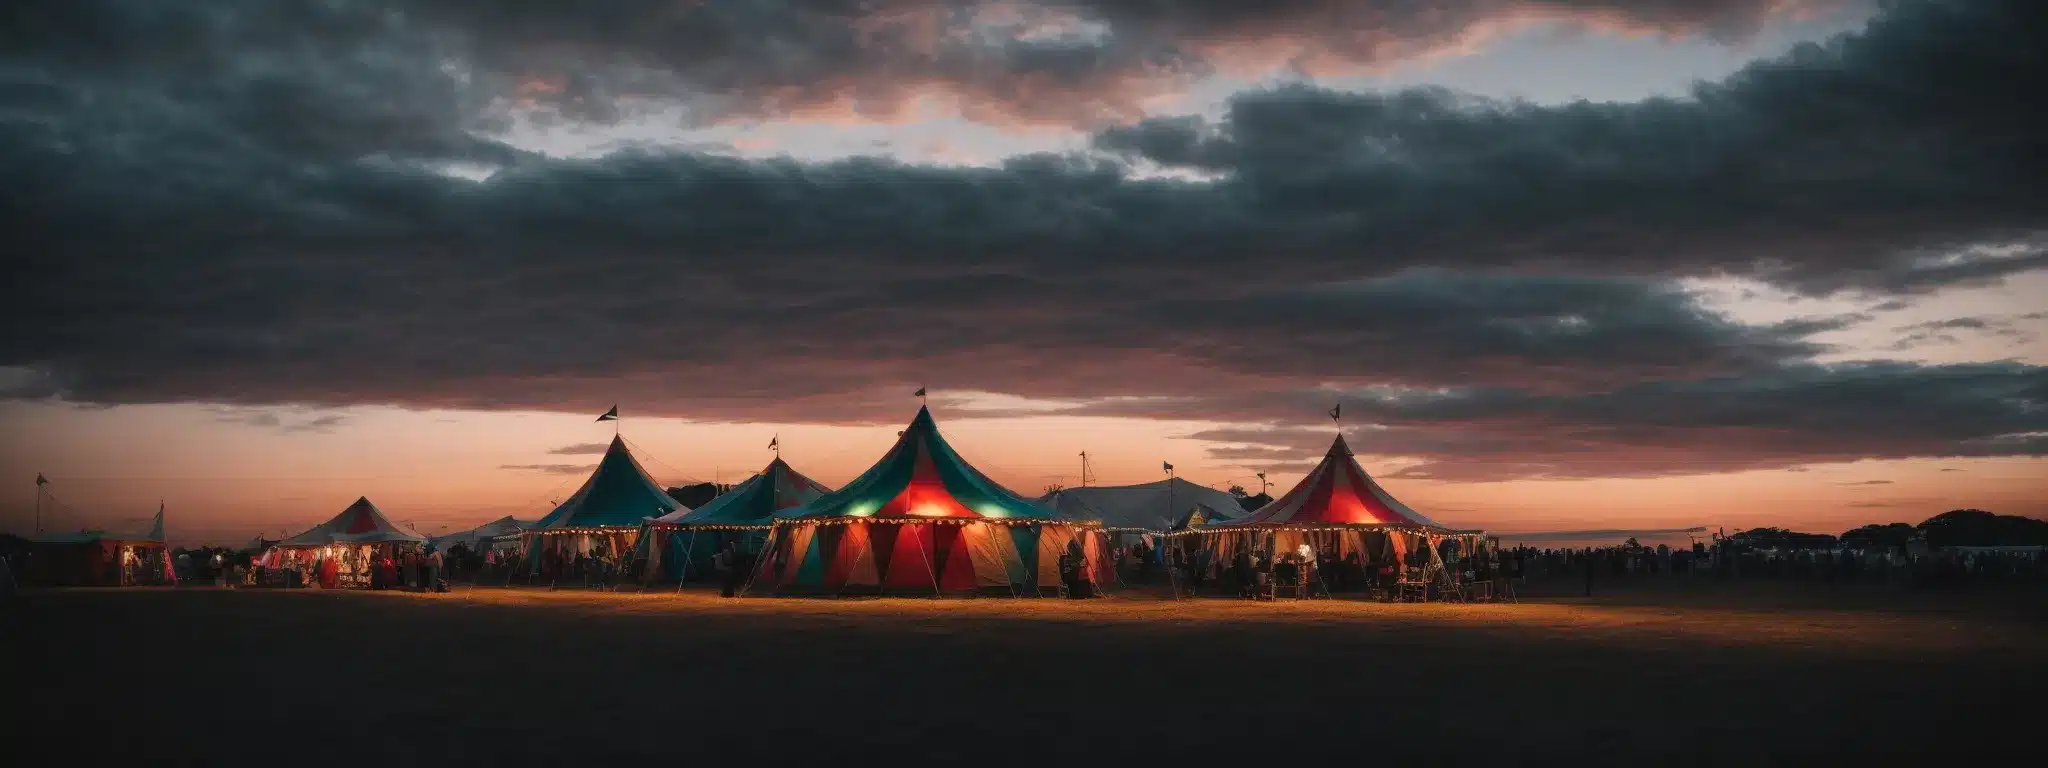 A Spotlight Illuminates A Vibrant Circus Tent Against The Evening Sky, Symbolizing A Premier Digital Event.